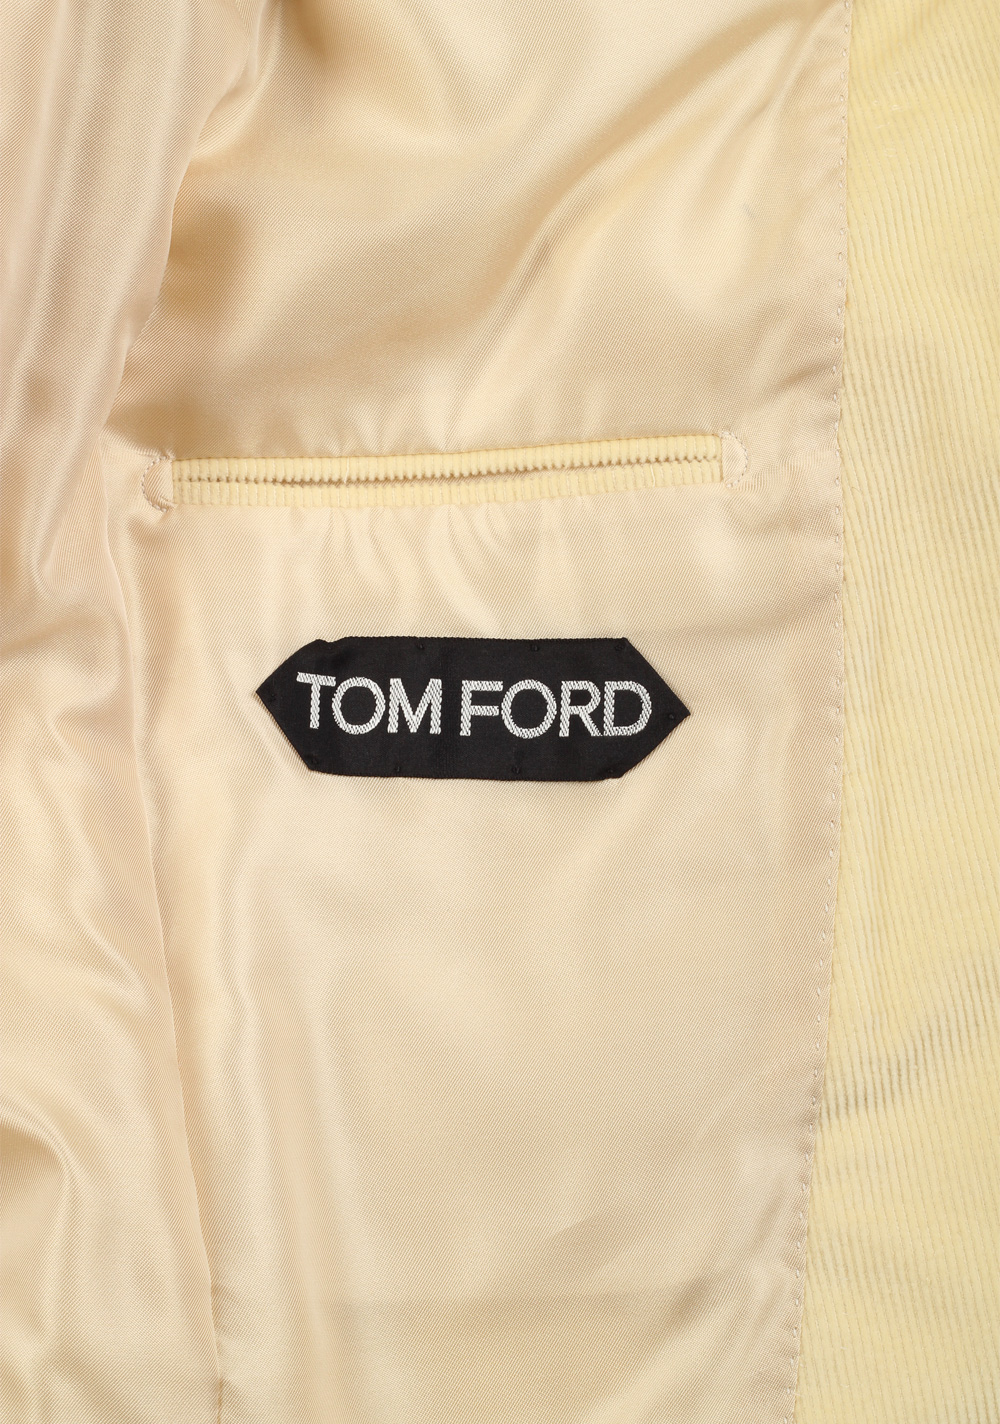 TOM FORD Atticus Sand Corduroy Suit Size 46 / 36R U.S. In Cotton Linen ...